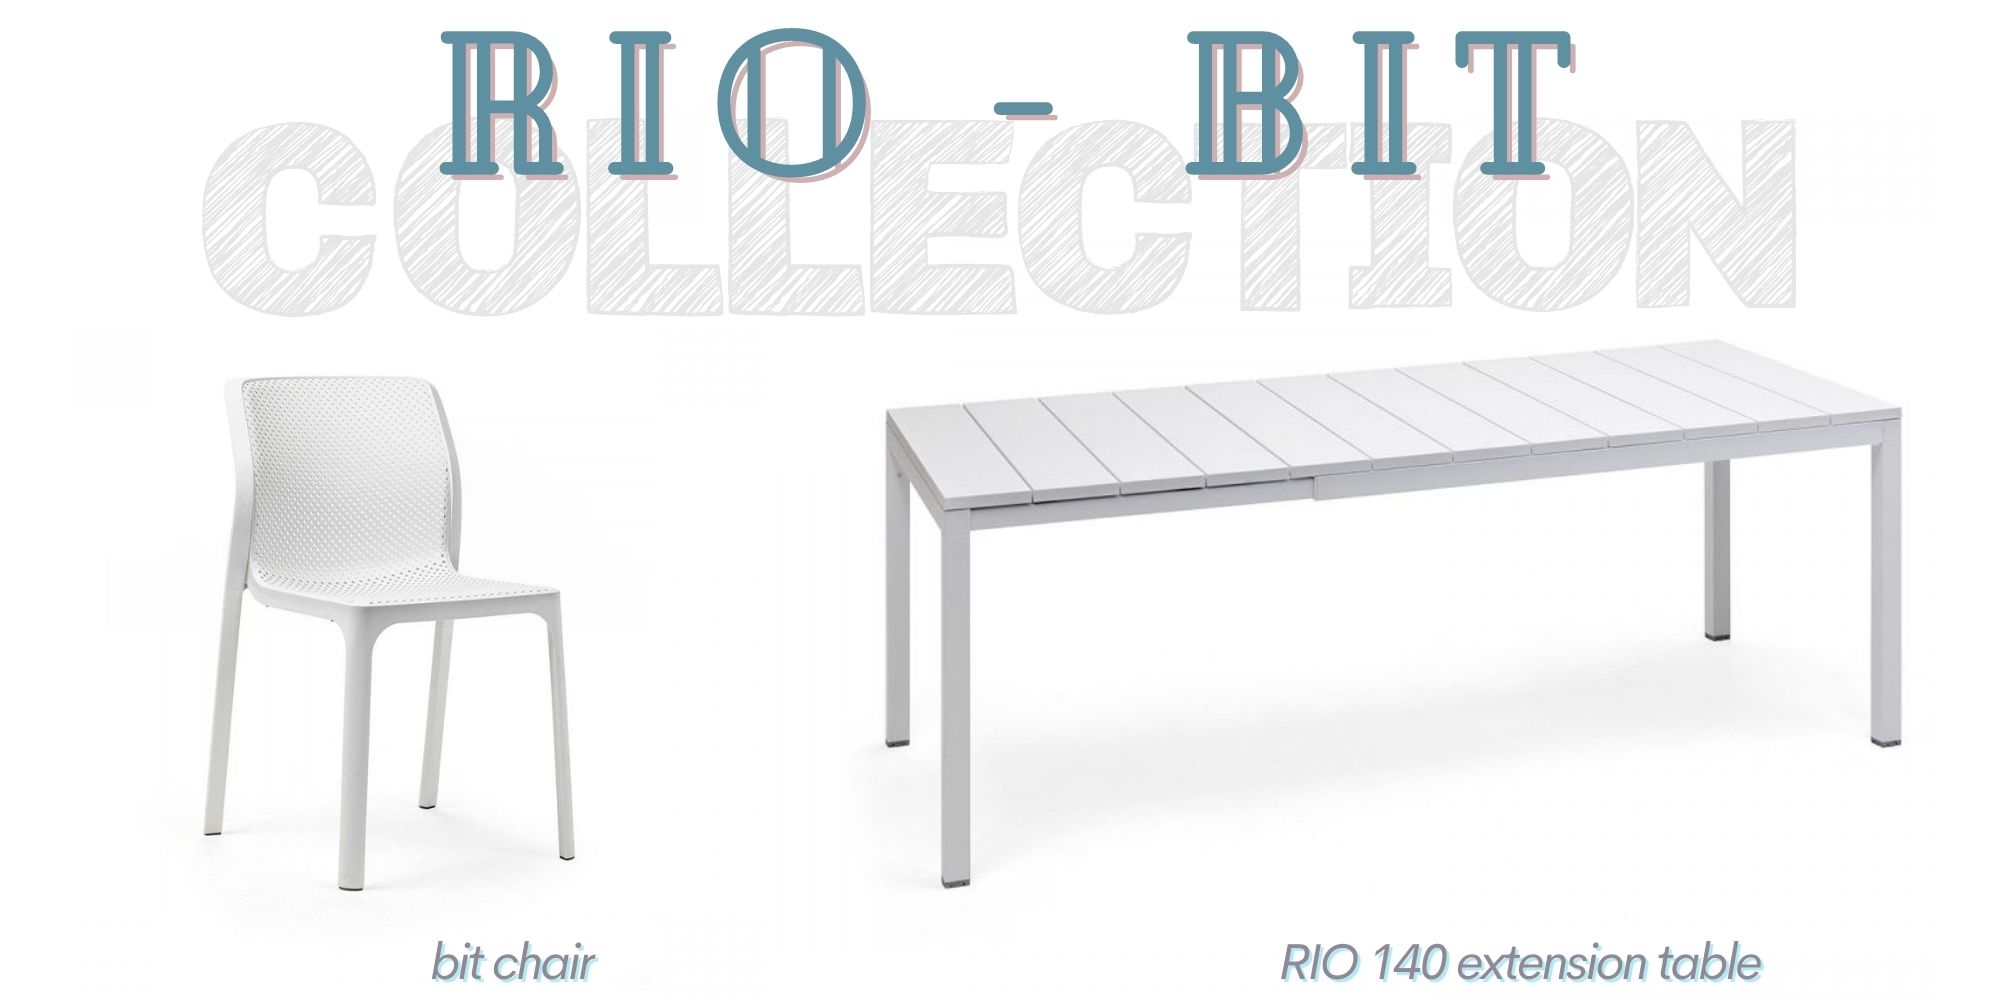 nardio-rio-table-and-bit-chair-set